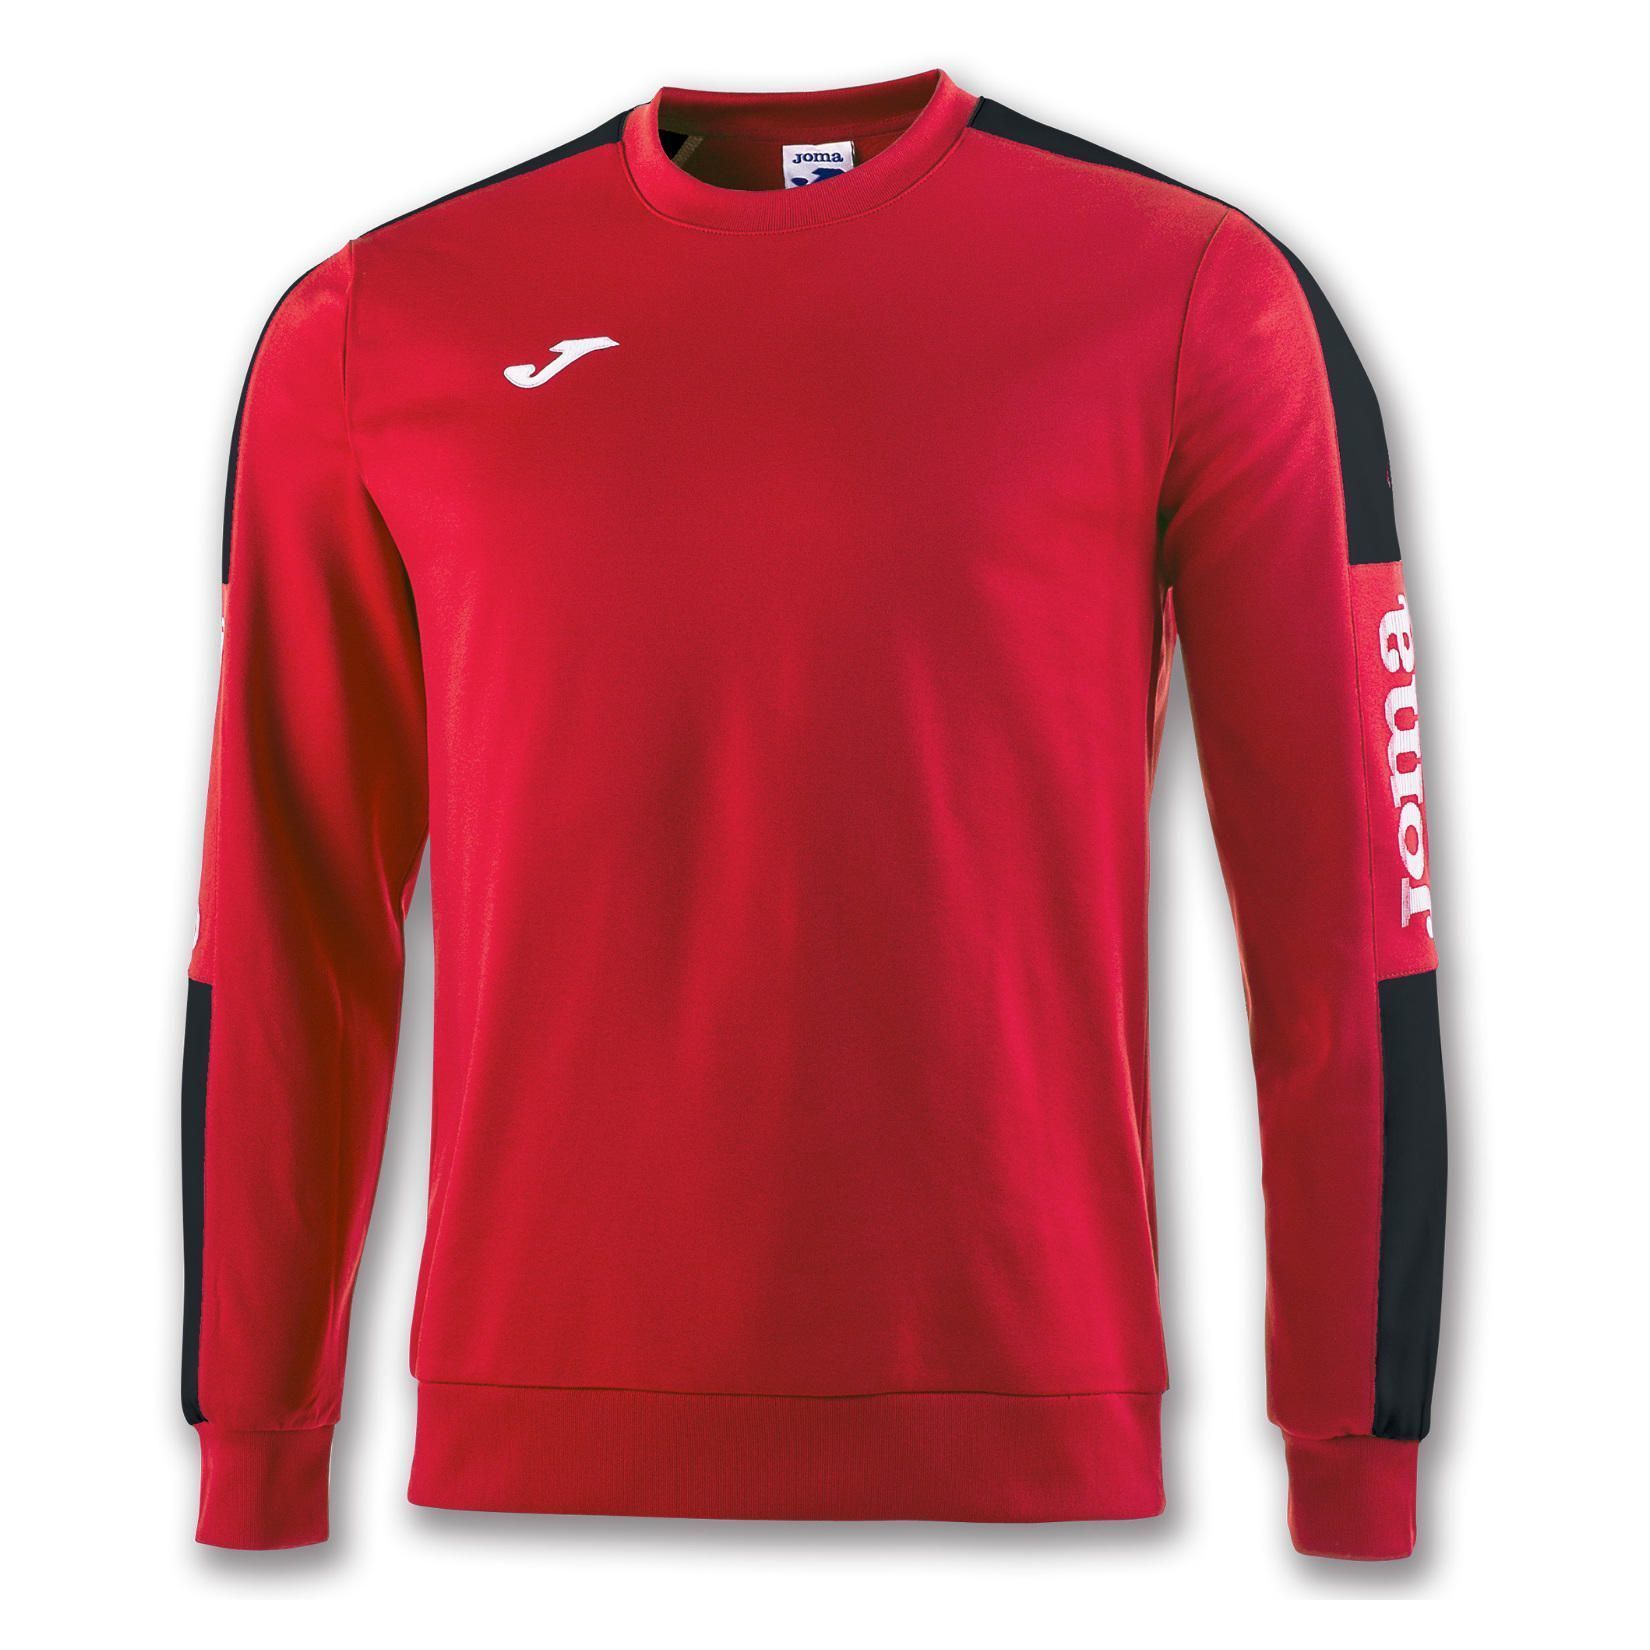 Joma Champion IV Sweatshirt (red/black)